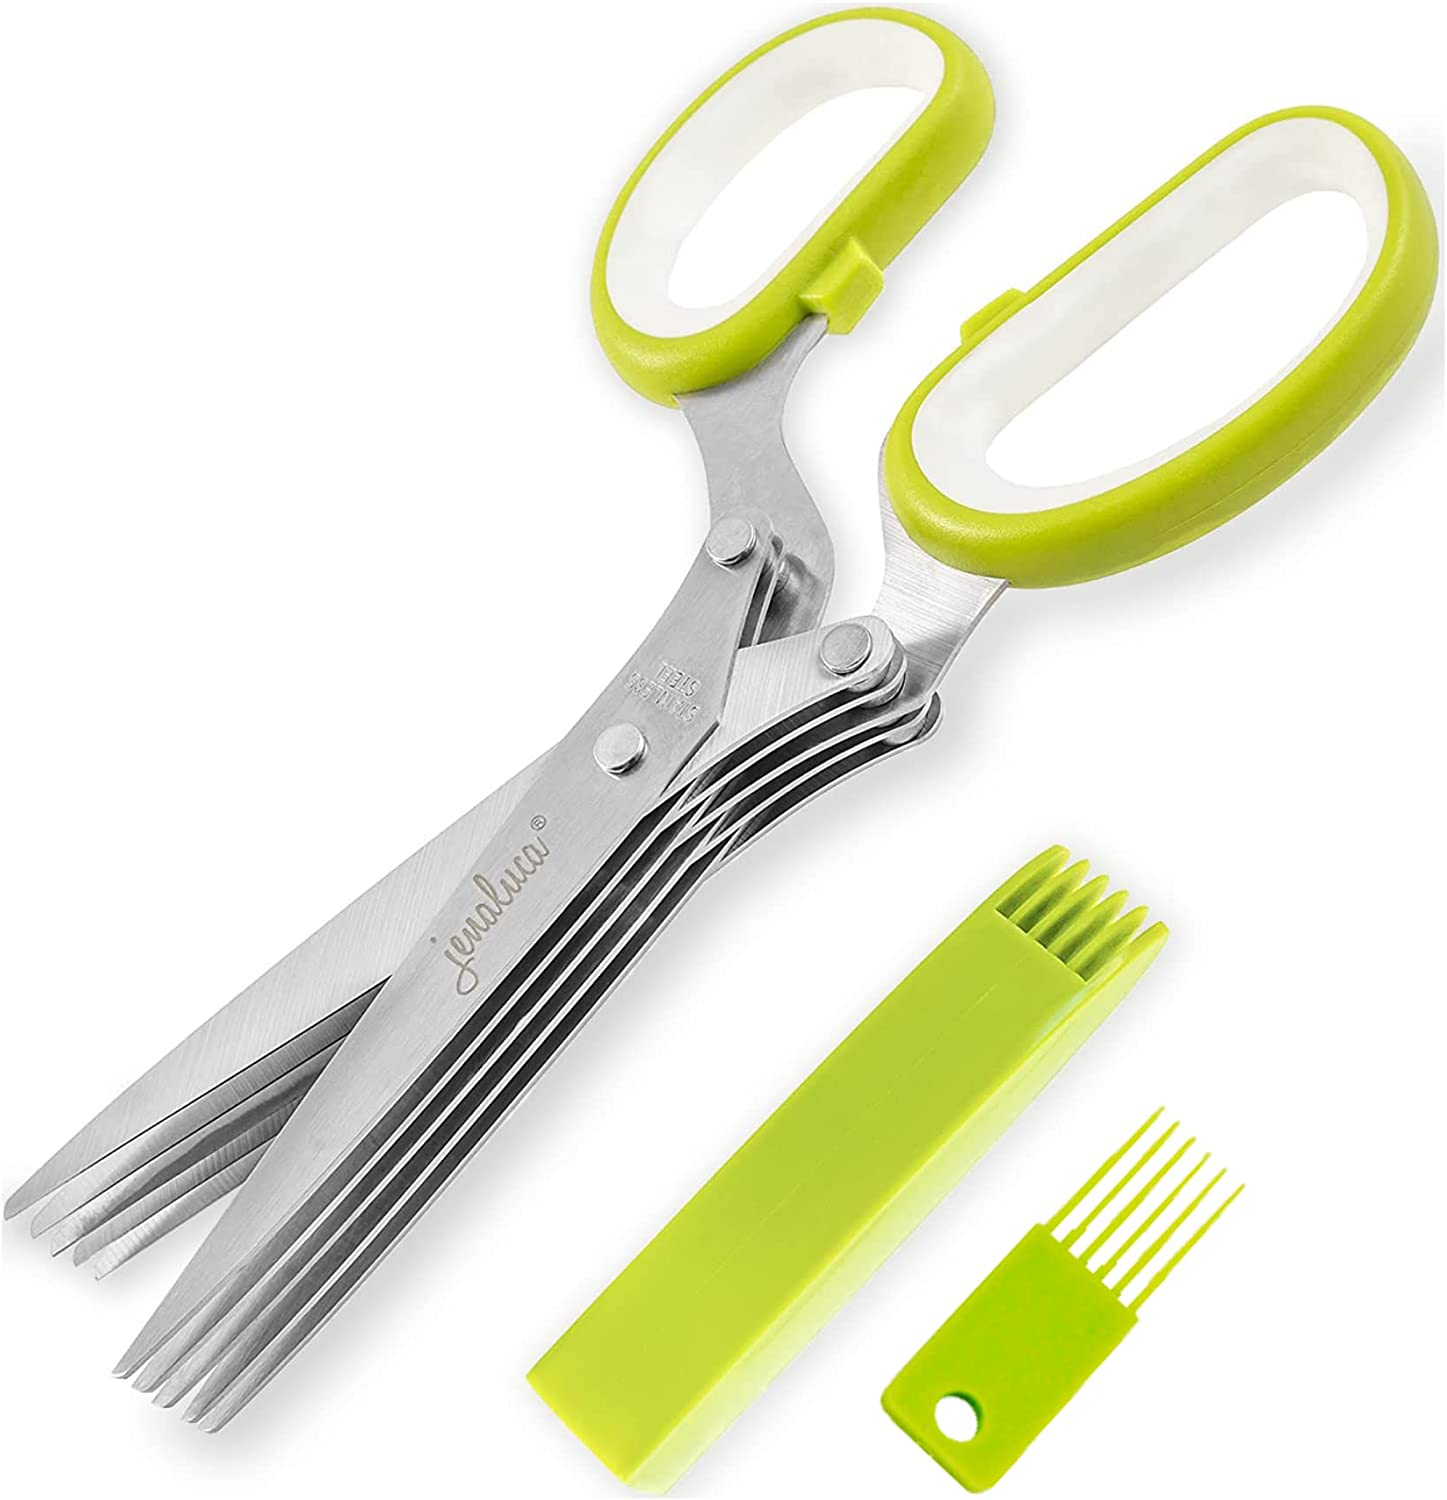 herb scissors |  Affordable kitchen gadgets